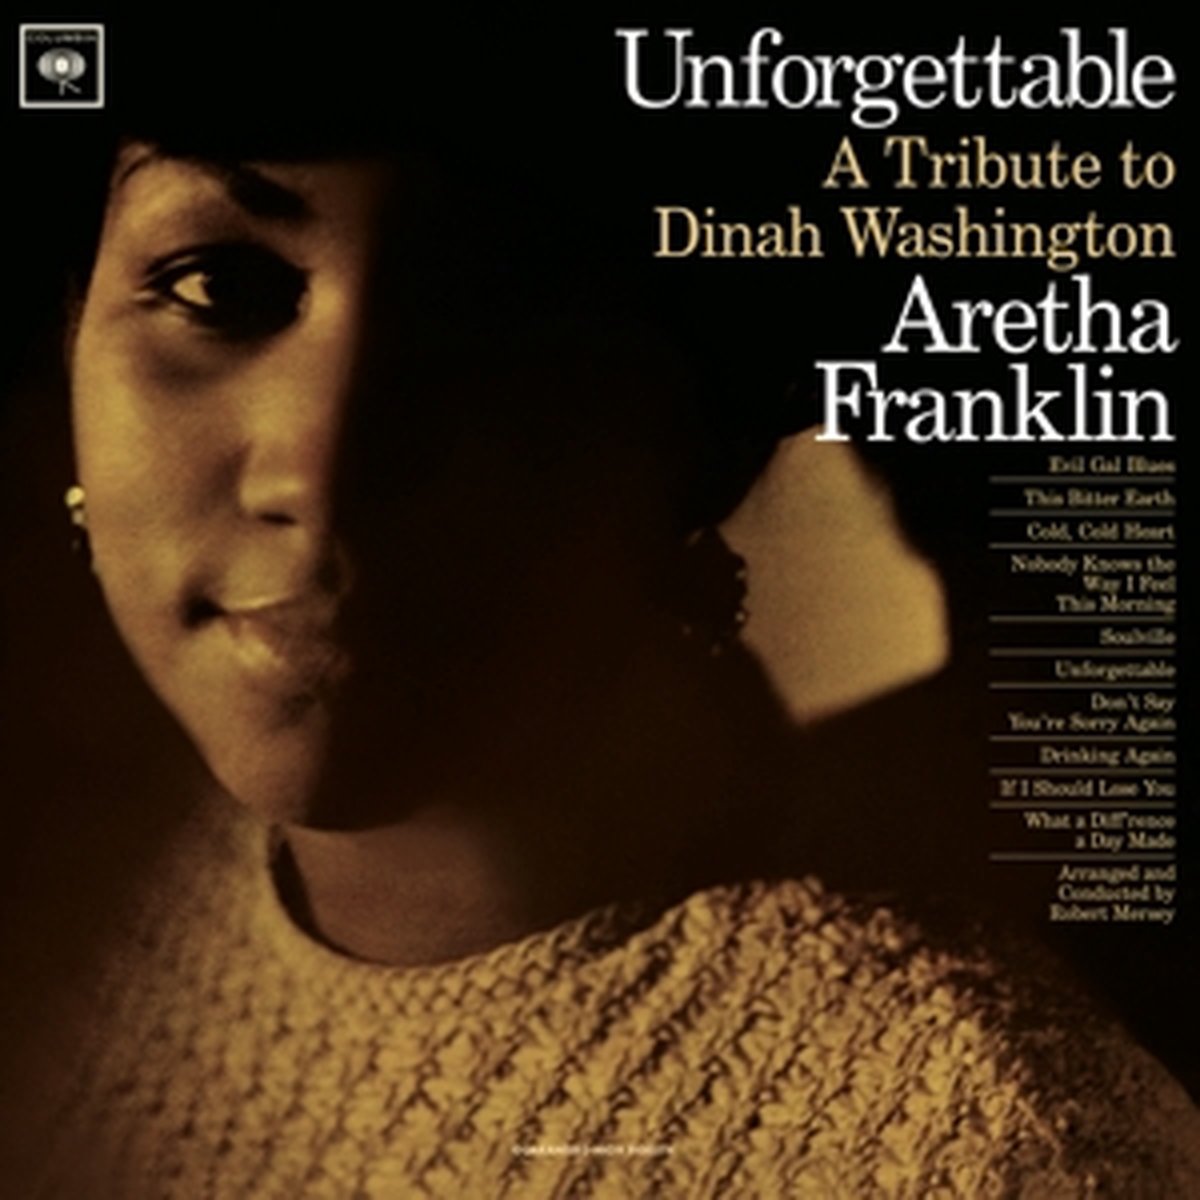 Aretha Franklin - Unforgettable - A Tribute To Dinah Washington (Crystal Clear Vinyl) - Aretha Franklin